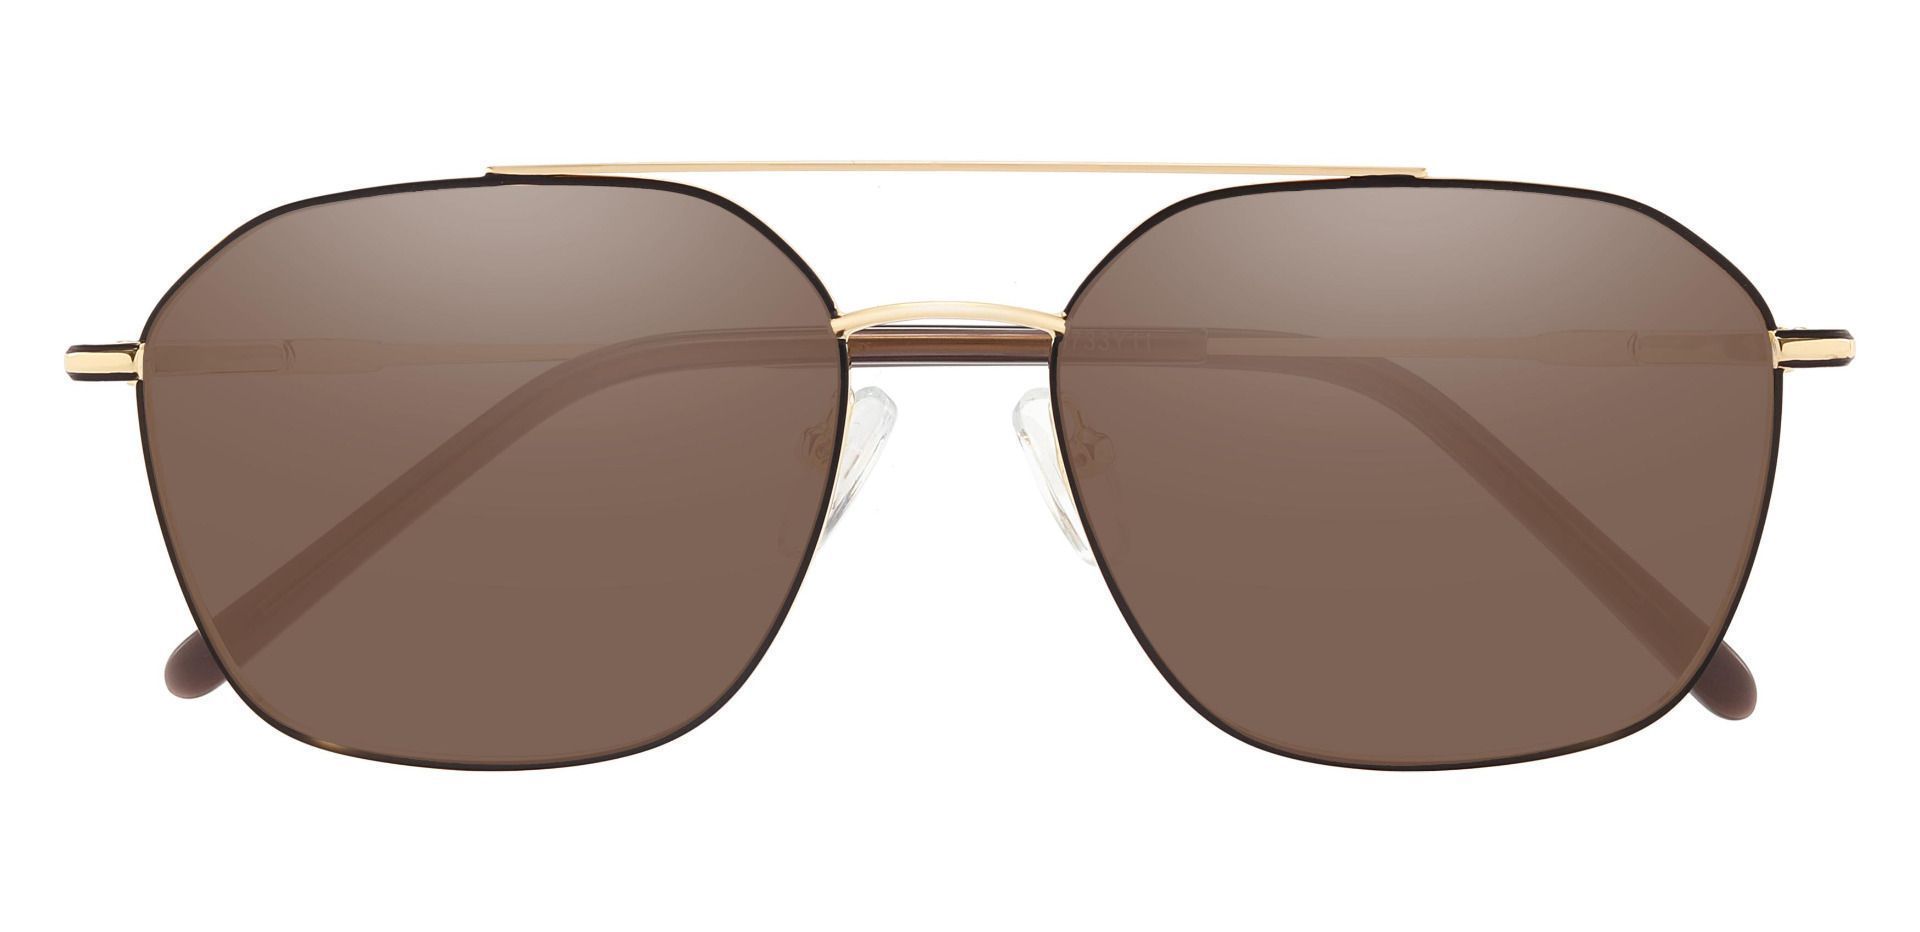 Harvey Aviator Prescription Sunglasses - Gold Frame With Brown Lenses